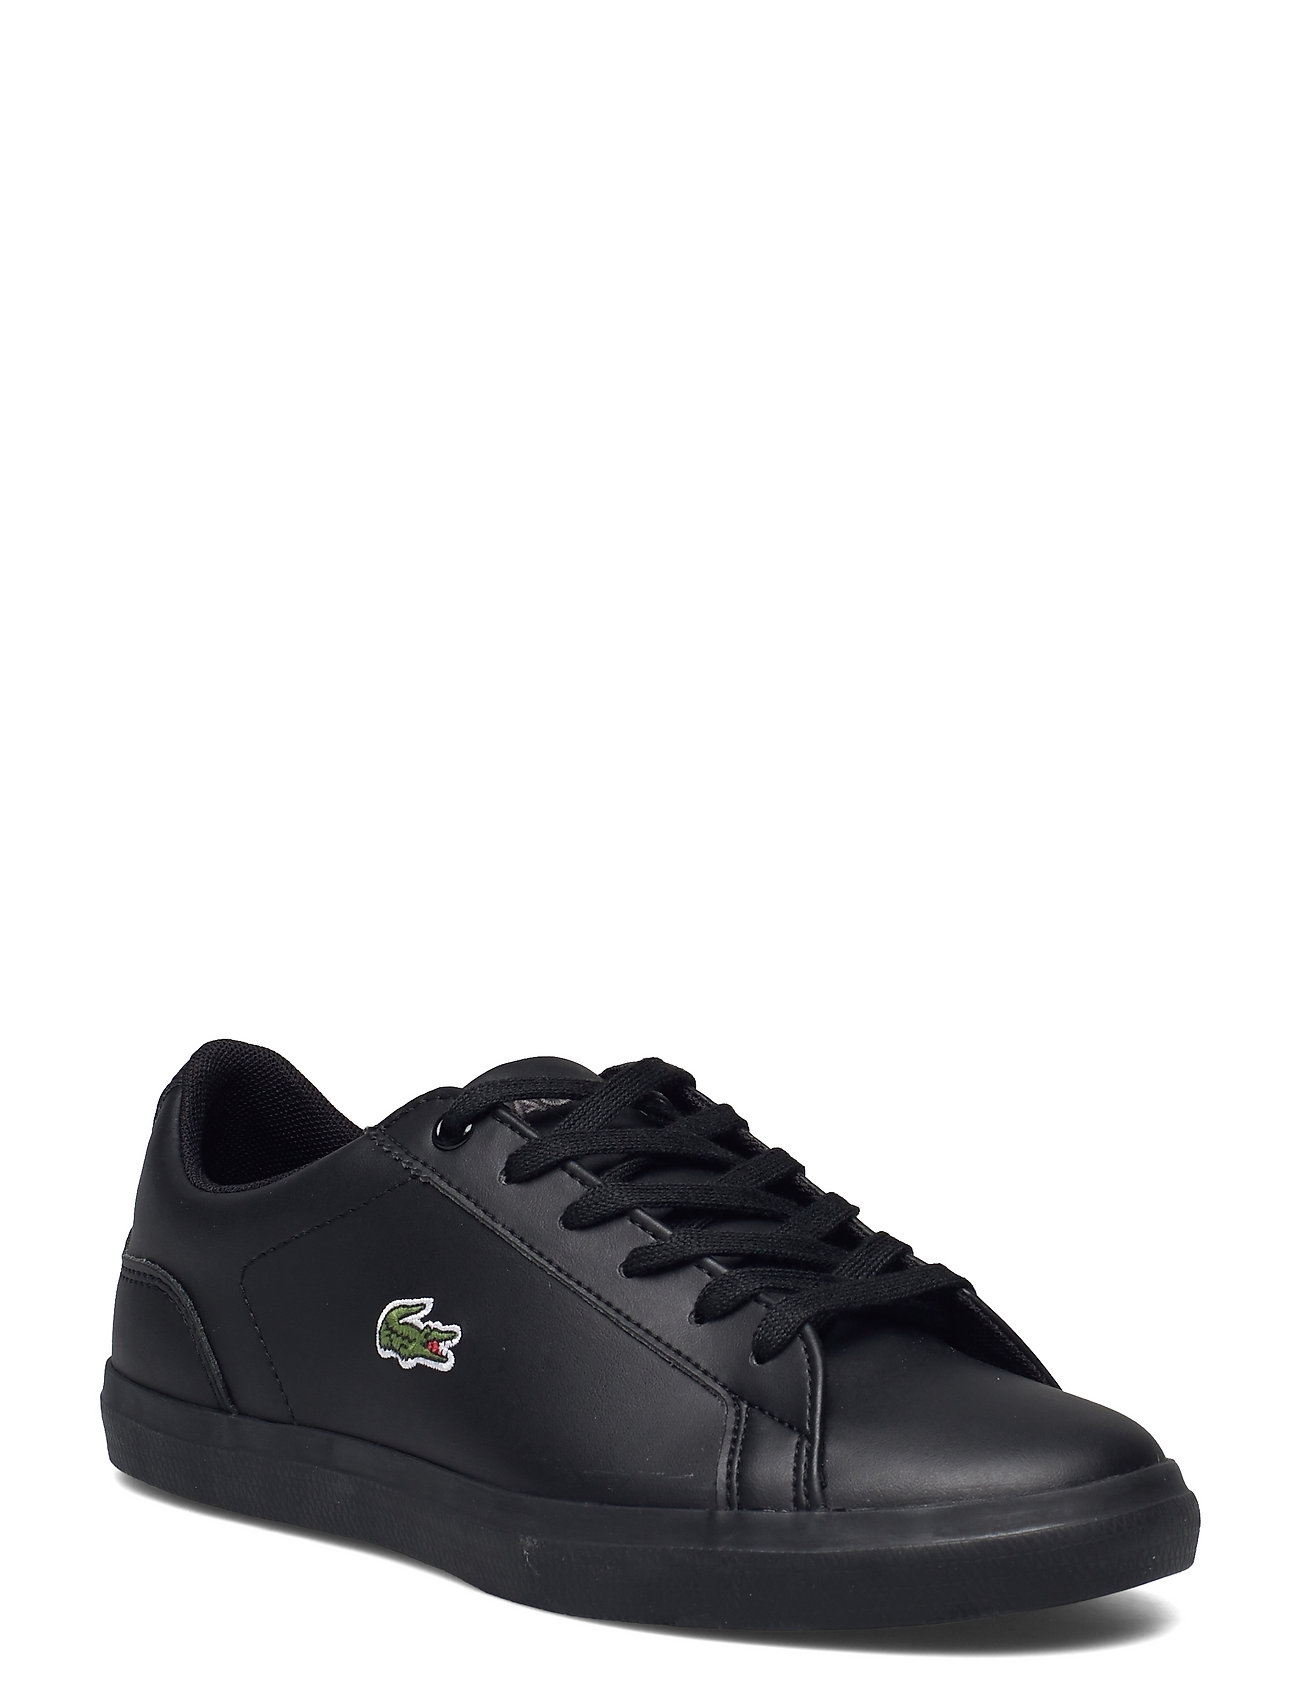 Tol Keer terug Protestant Lacoste Shoes Lerond Bl 21 1 Cuj - Laag sneakers | Boozt.com